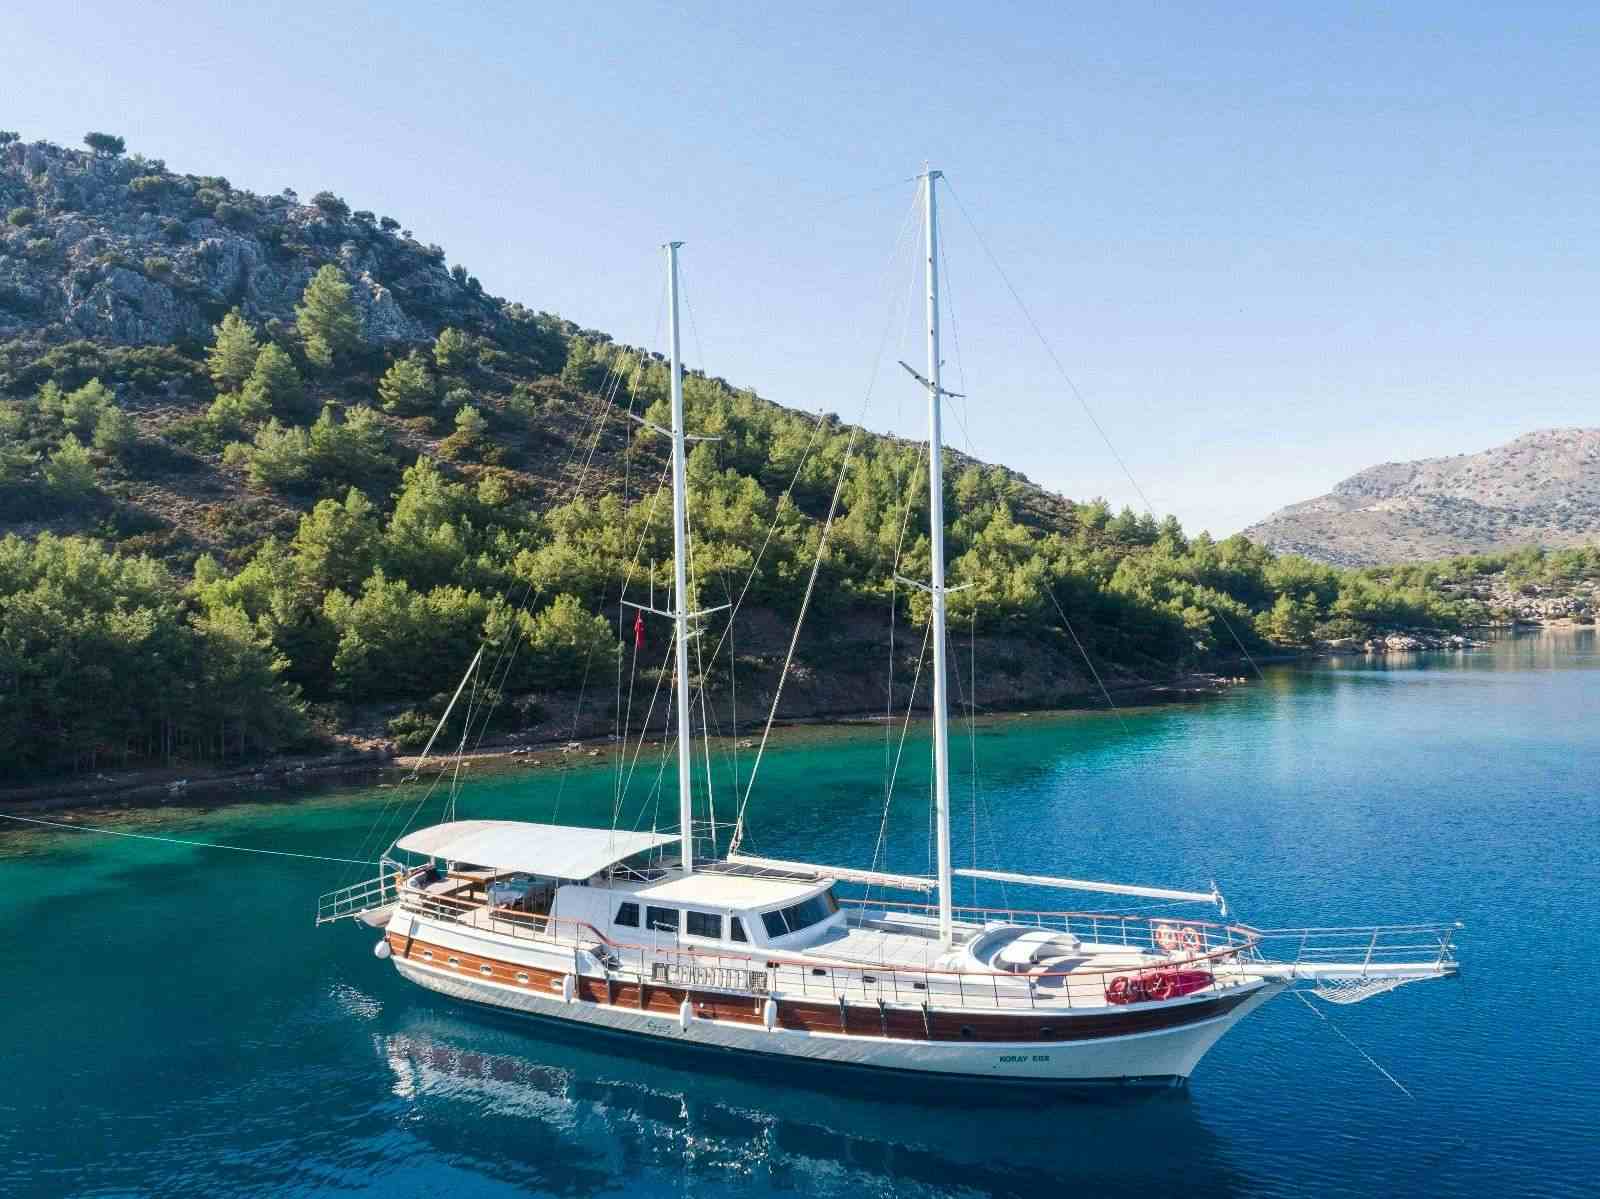 koray ege - Yacht Charter Keramoti & Boat hire in Greece & Turkey 1